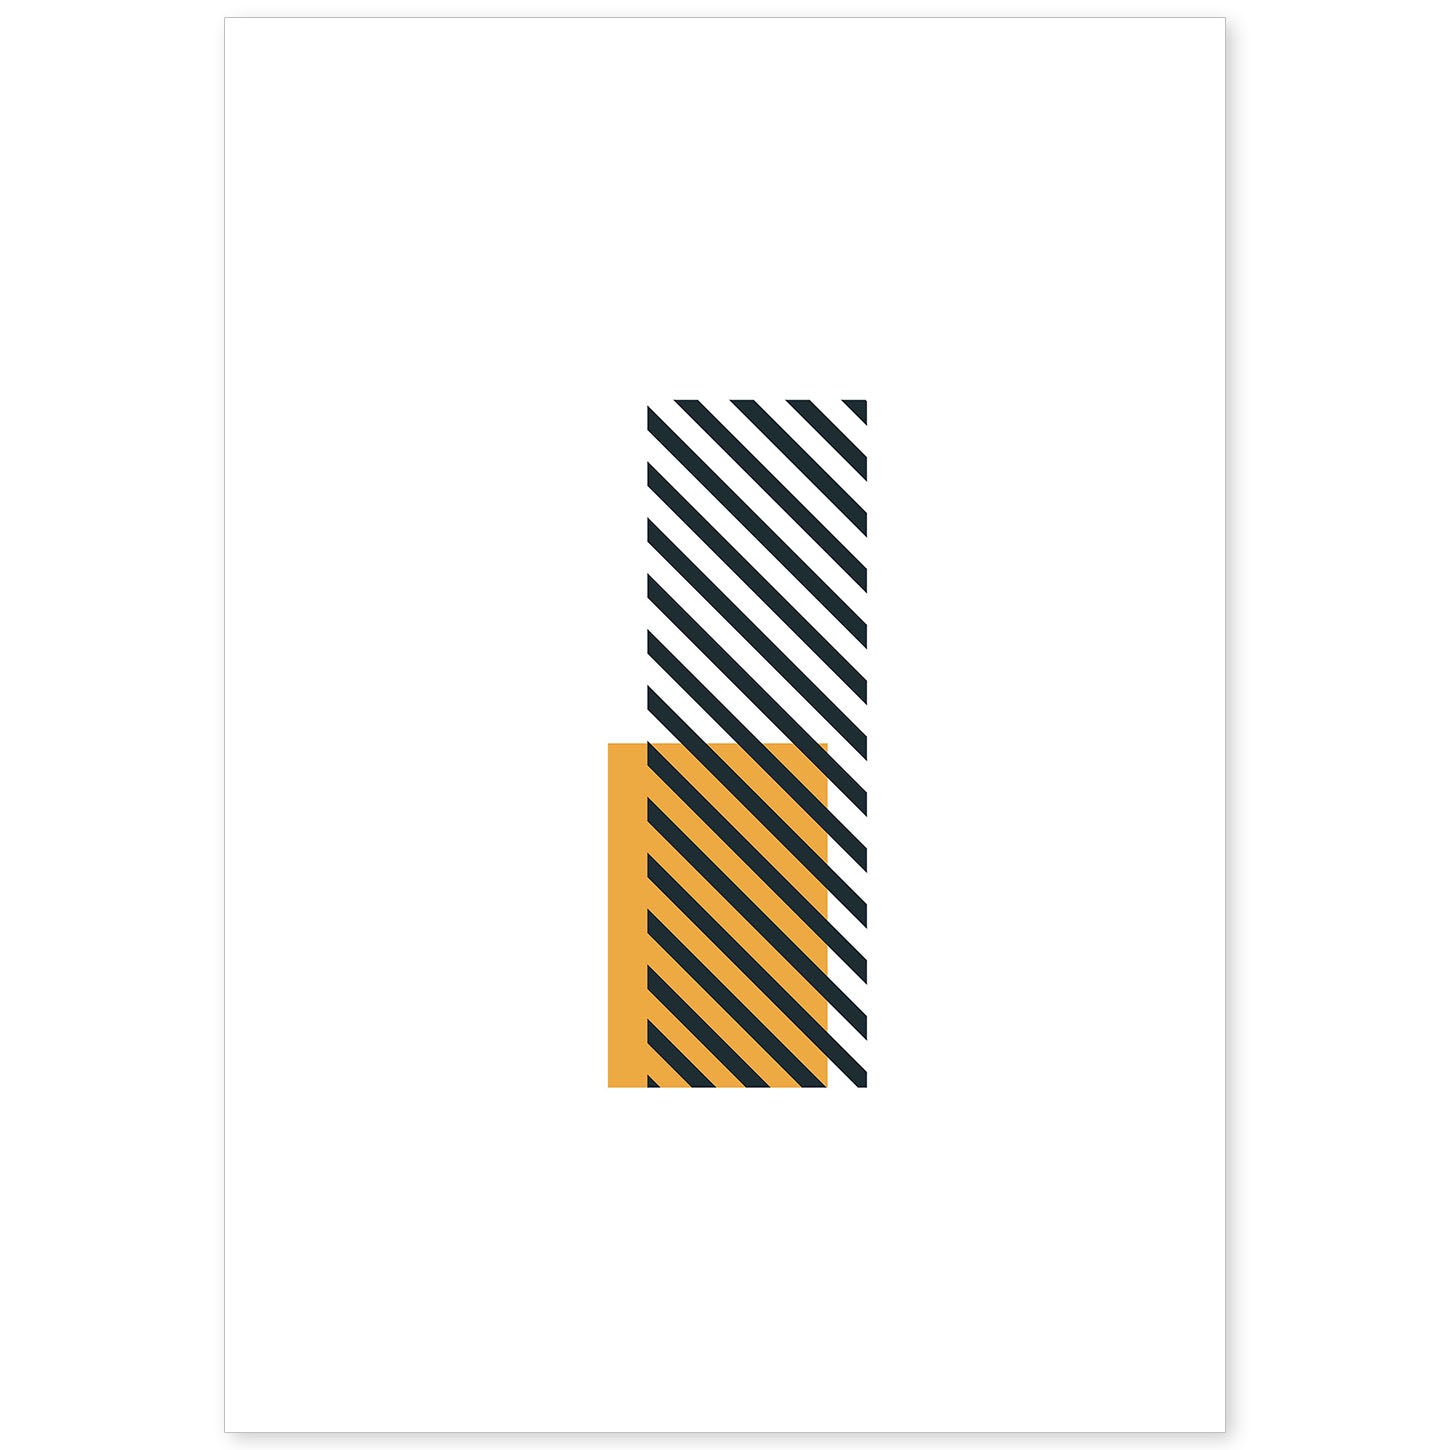 Poster de letra I. Lámina estilo Geometria con imágenes del alfabeto.-Artwork-Nacnic-A4-Sin marco-Nacnic Estudio SL